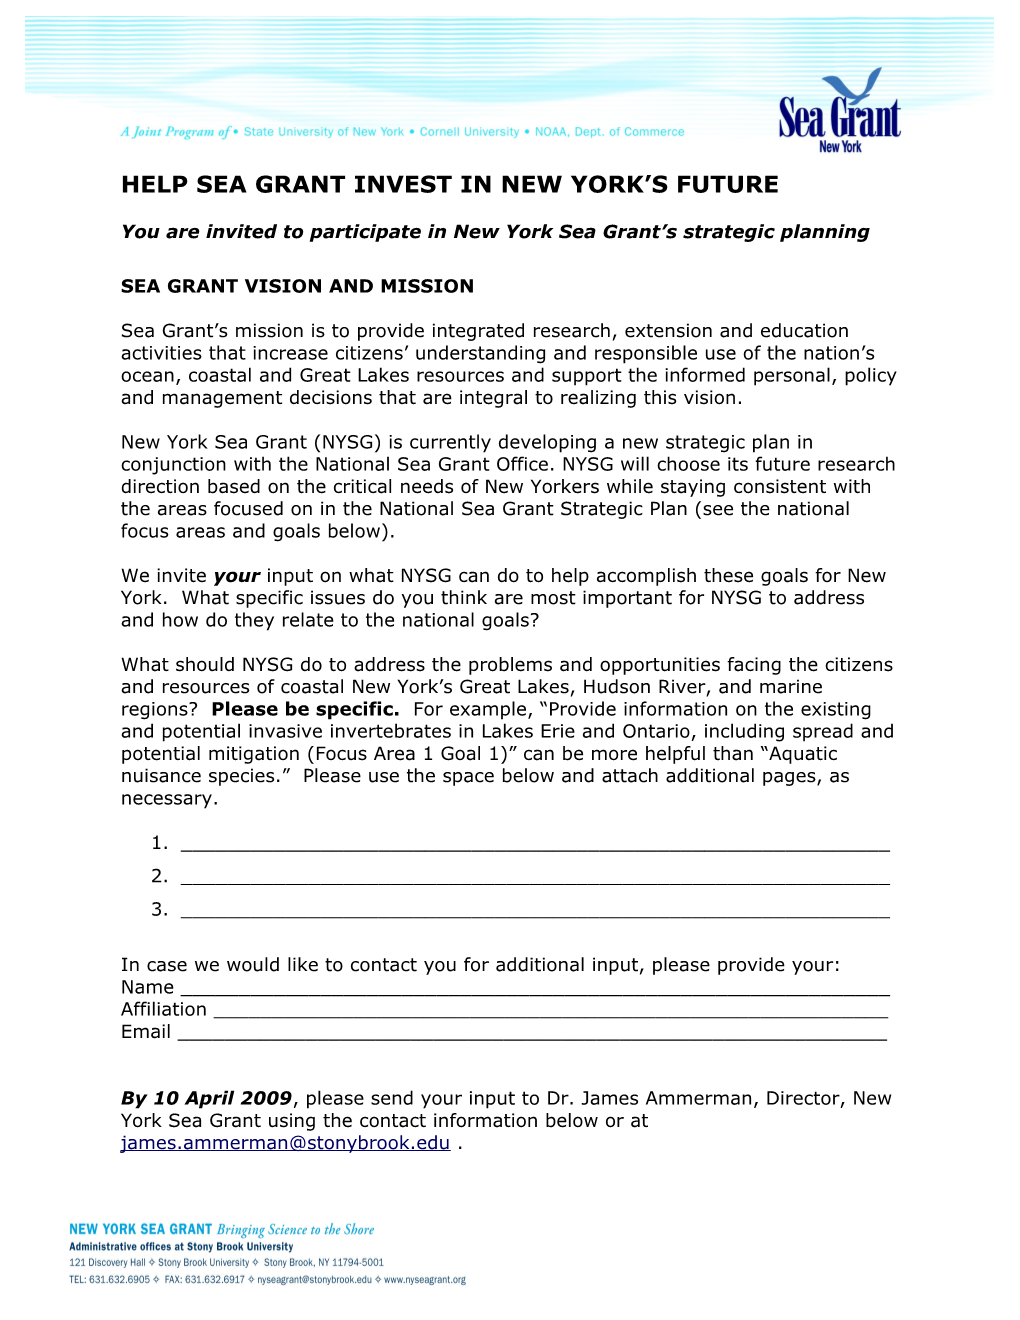 Helpsea Grant Invest in New York S Future